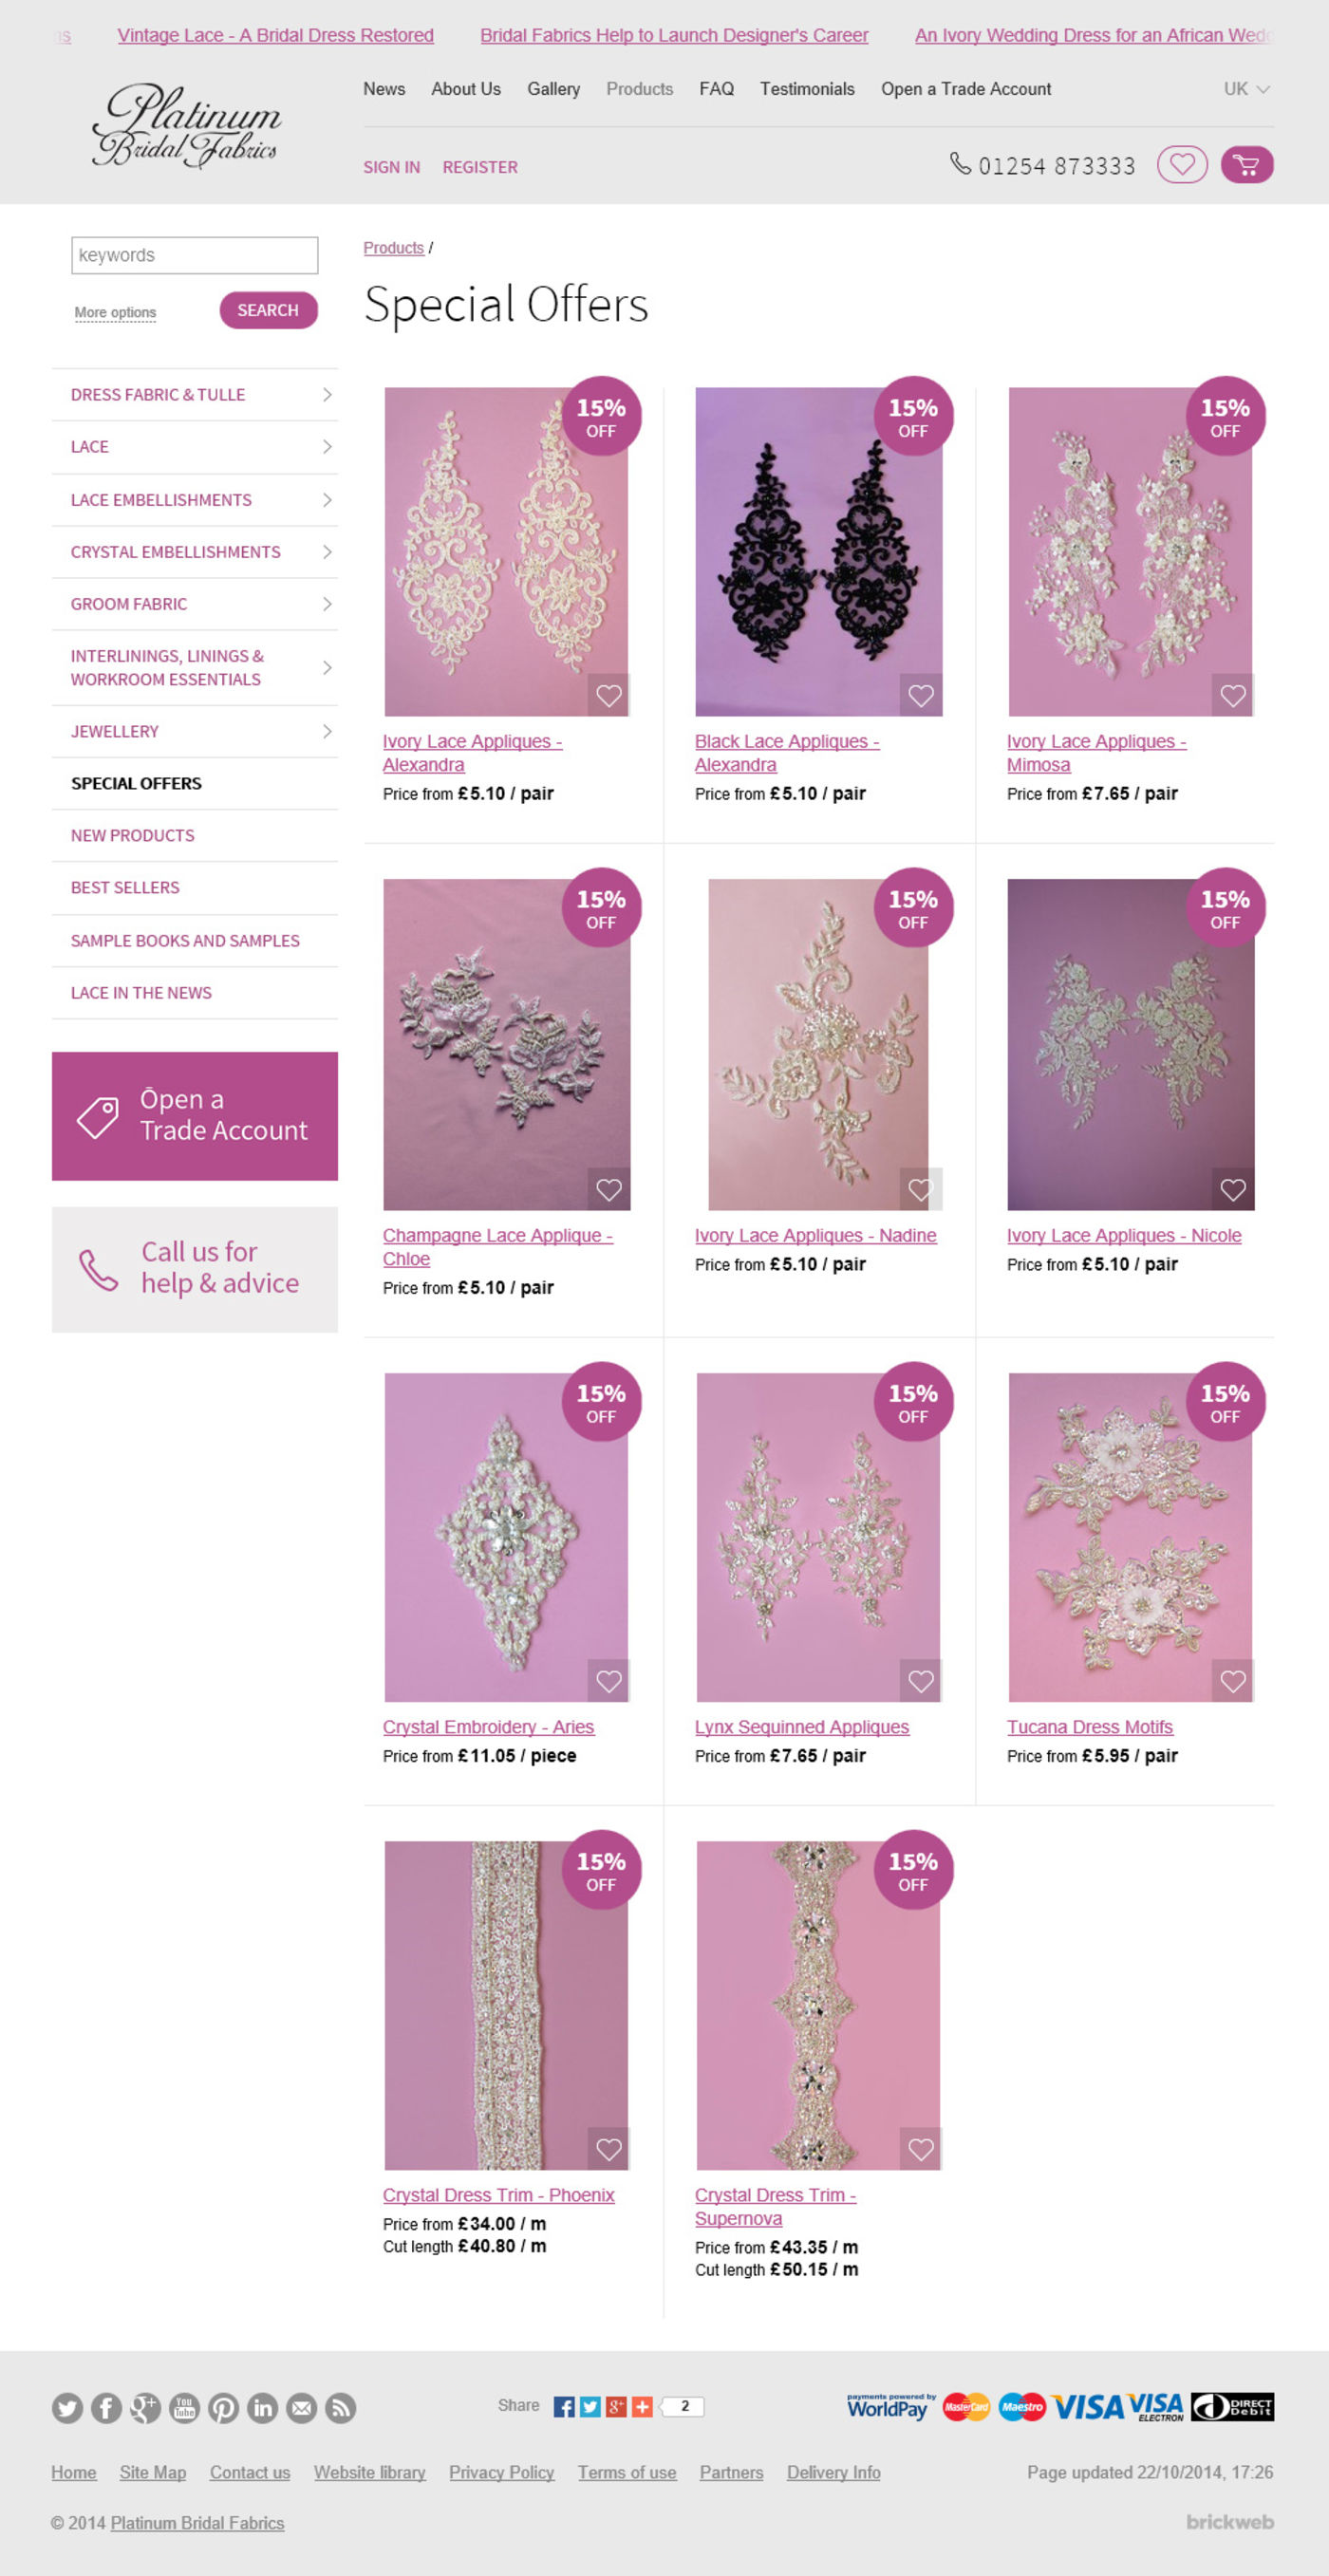 Bridal Fabrics (2014) Products